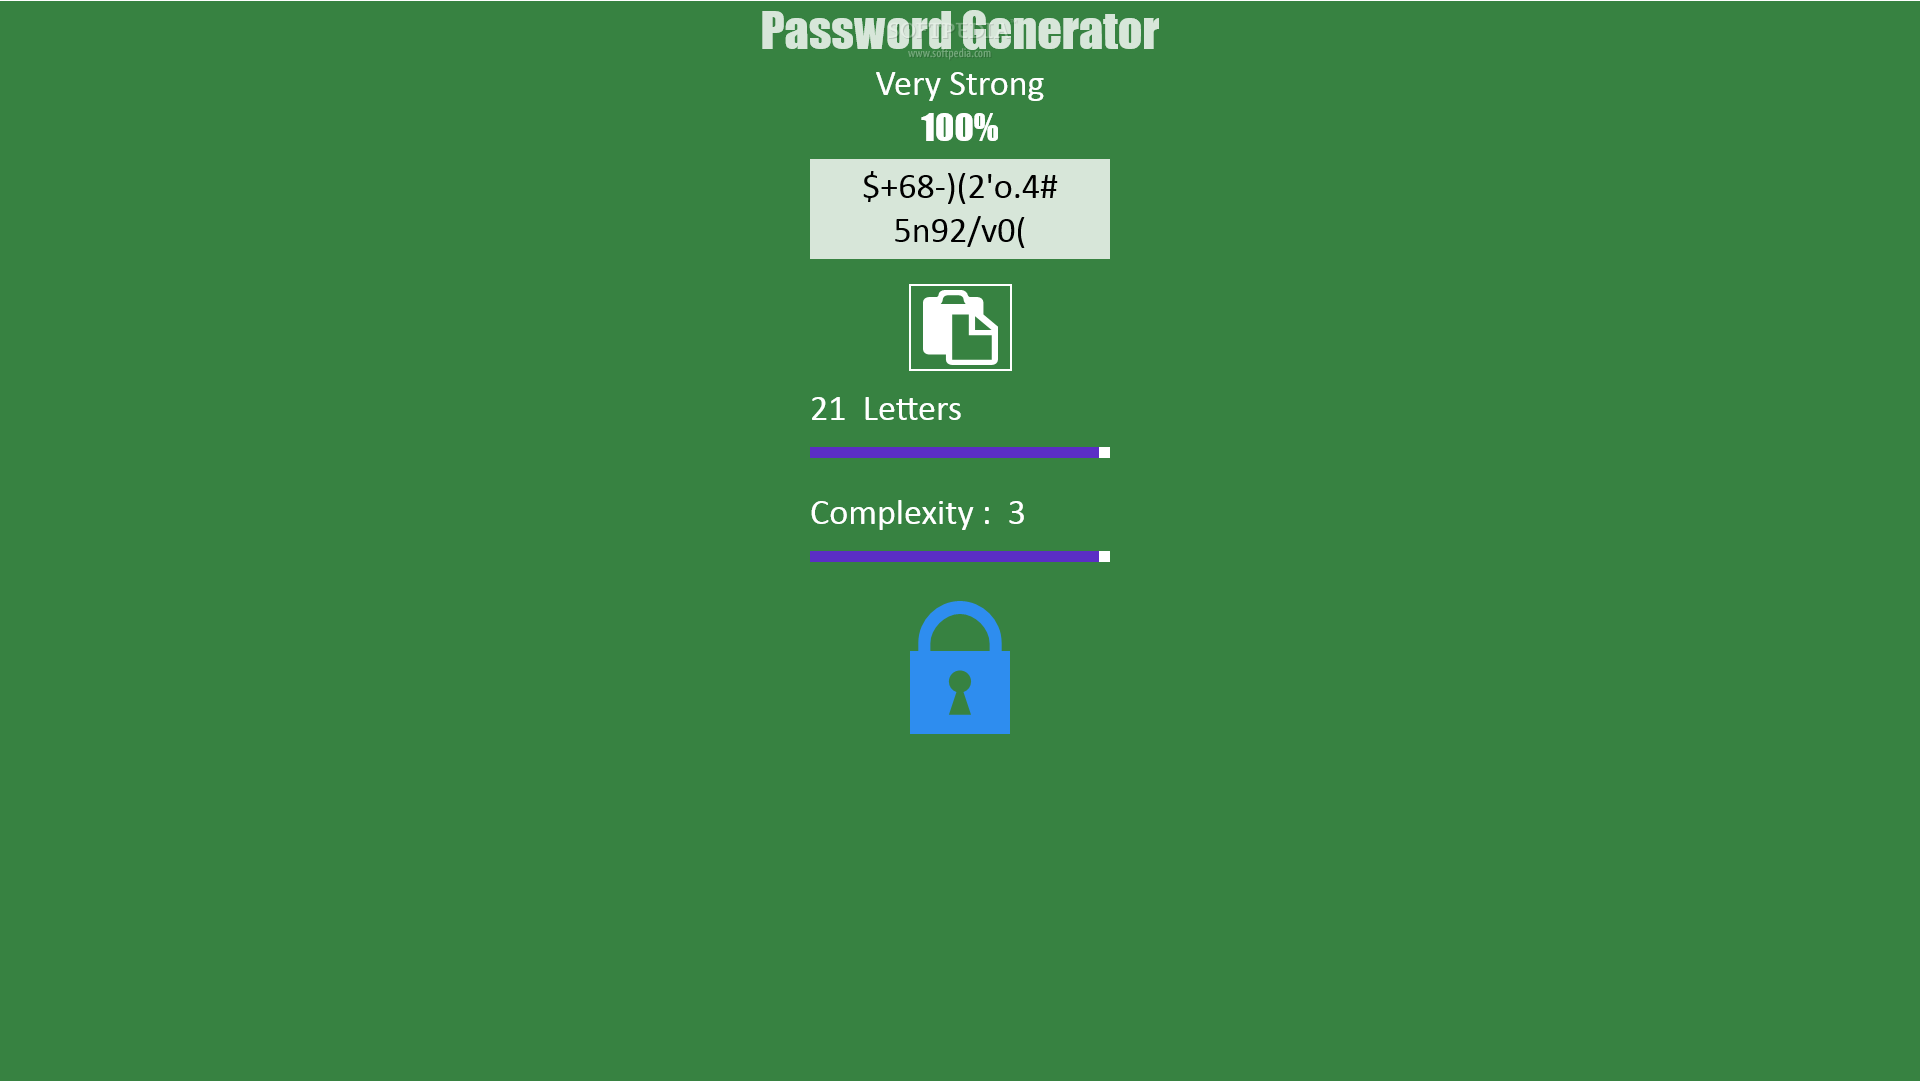 windows secure password generator